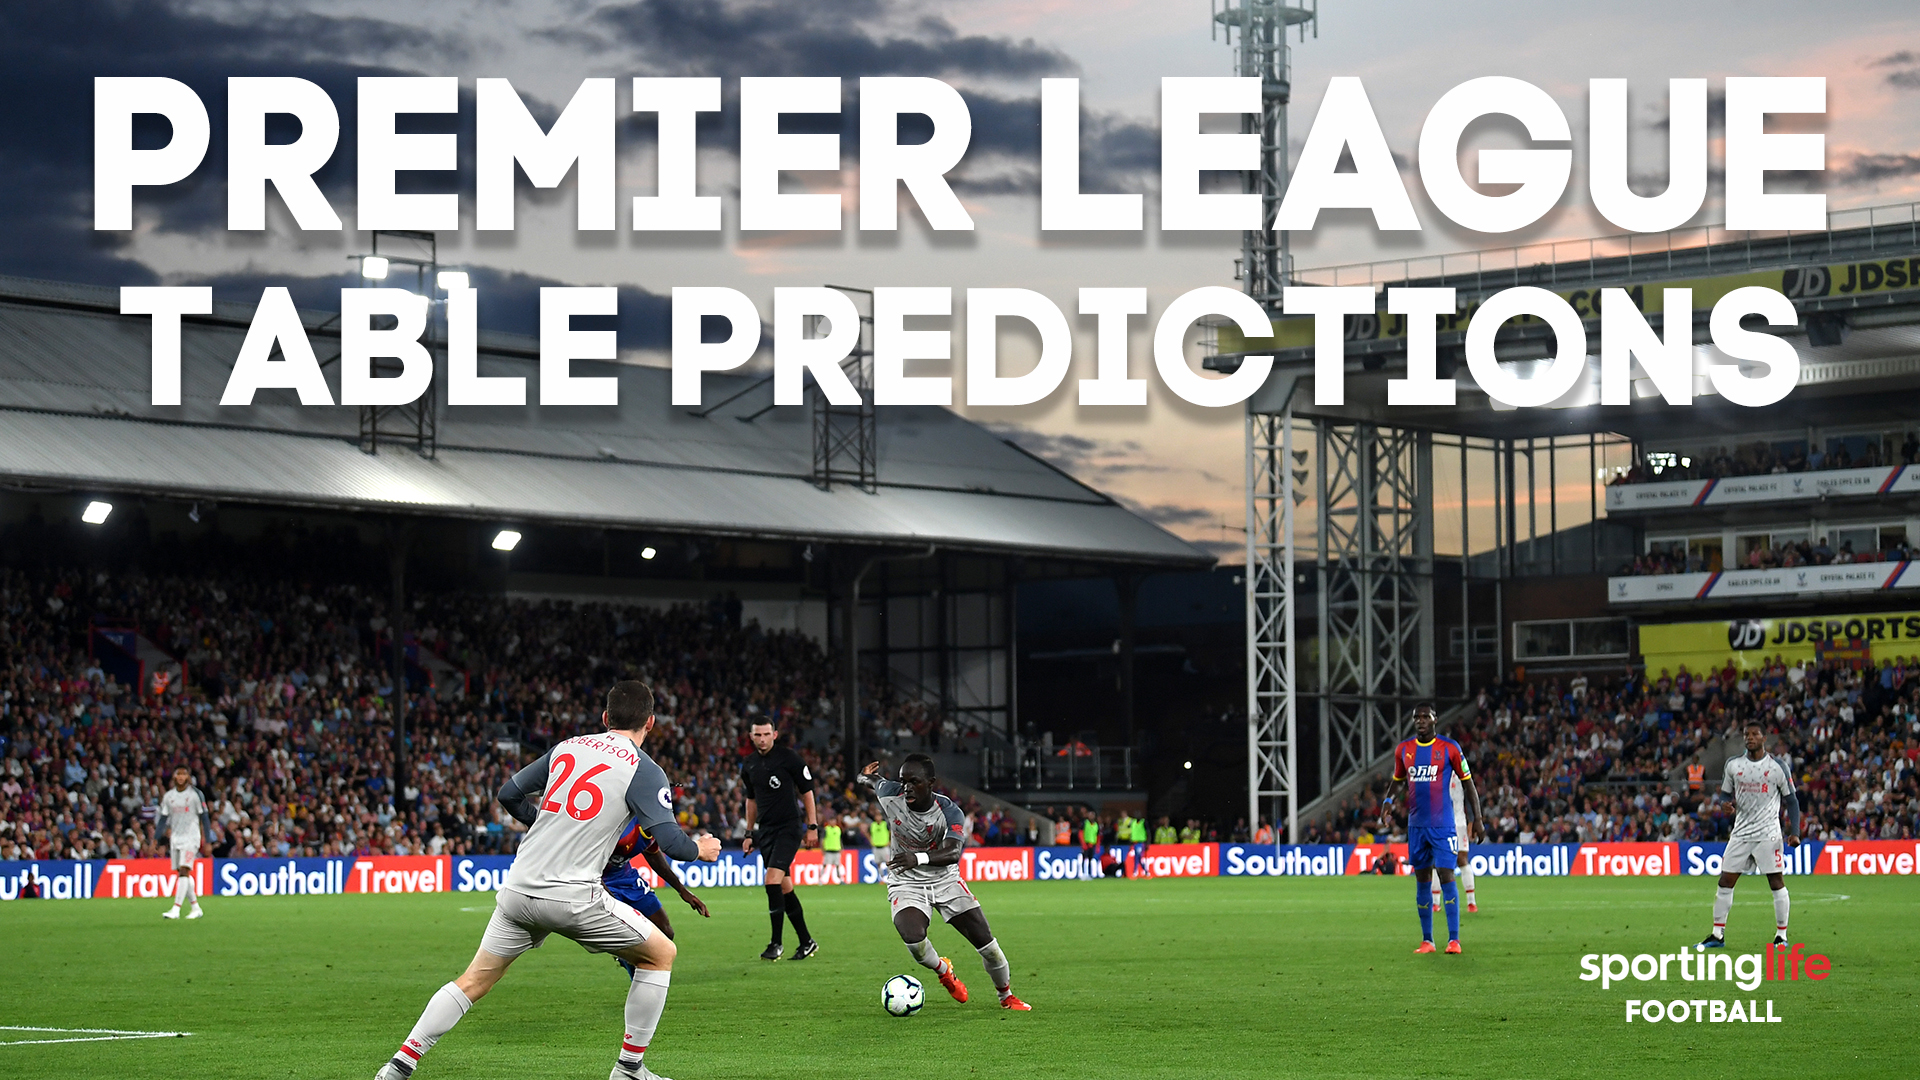 EFL Final Championship League Table Predictions 2018/19 